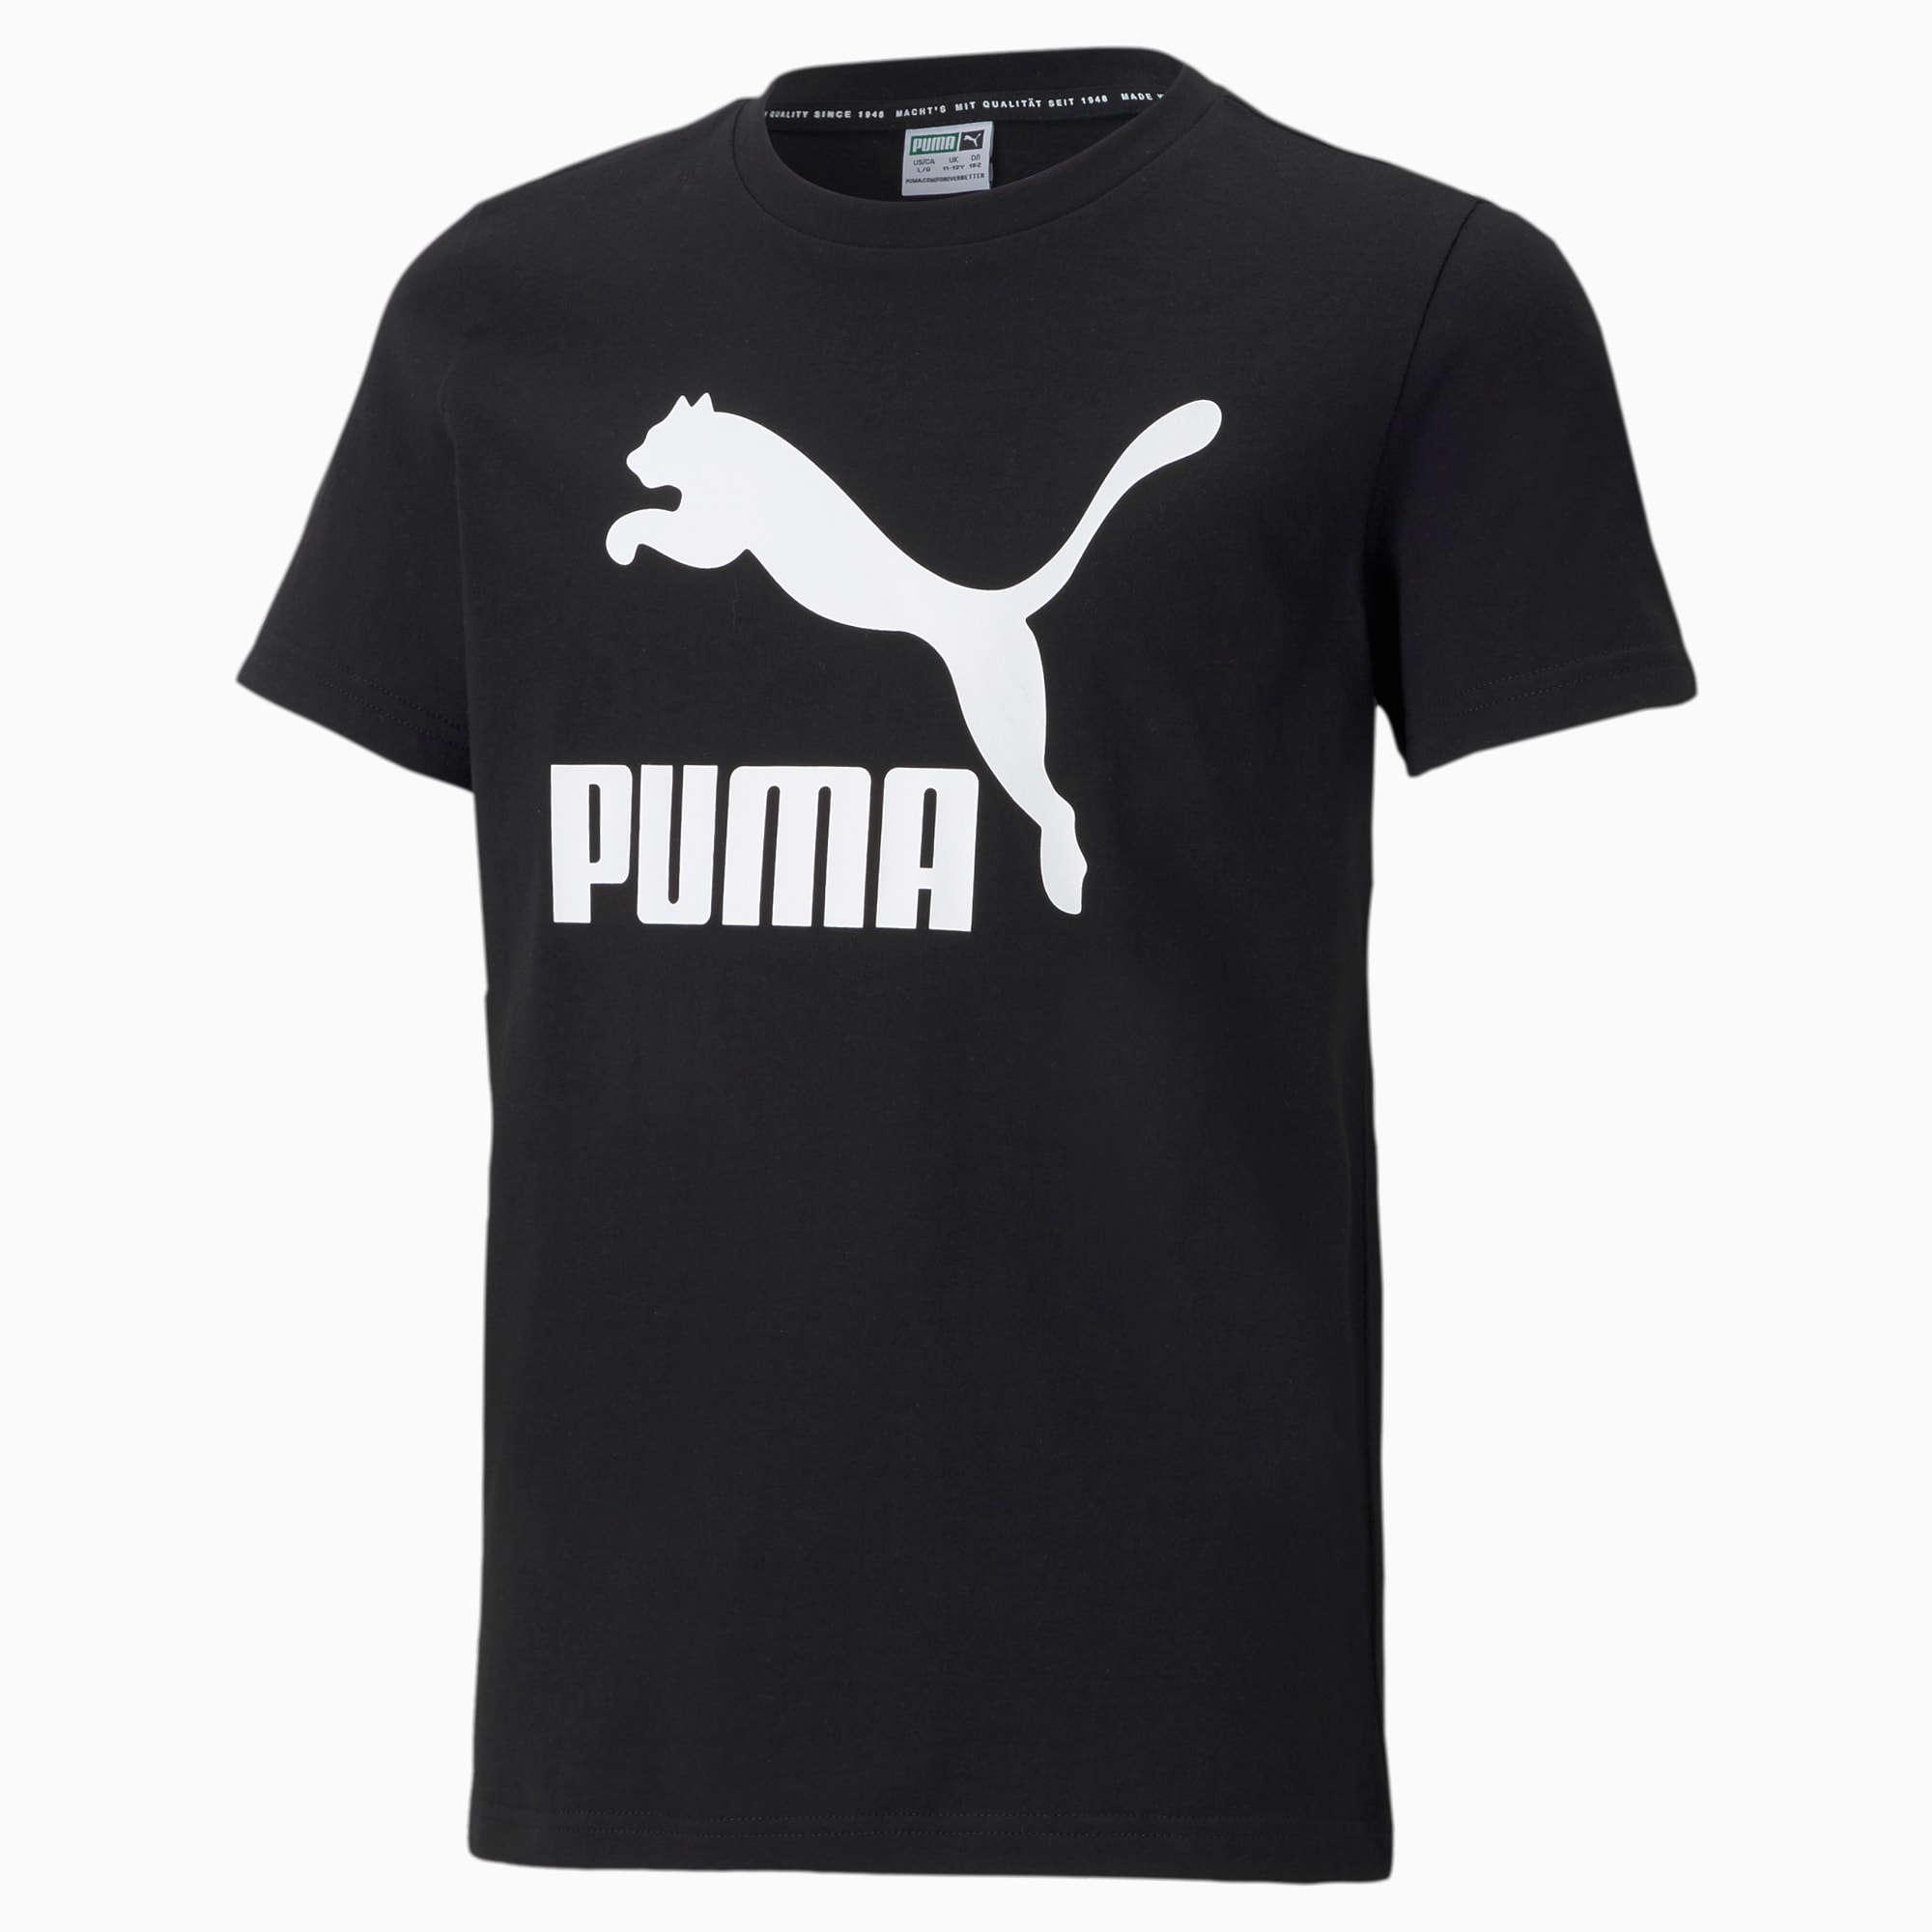 Puma Brand KIDS Girl's PUMA Logo Short Sleeve Crew Neck Sport T-Shirt